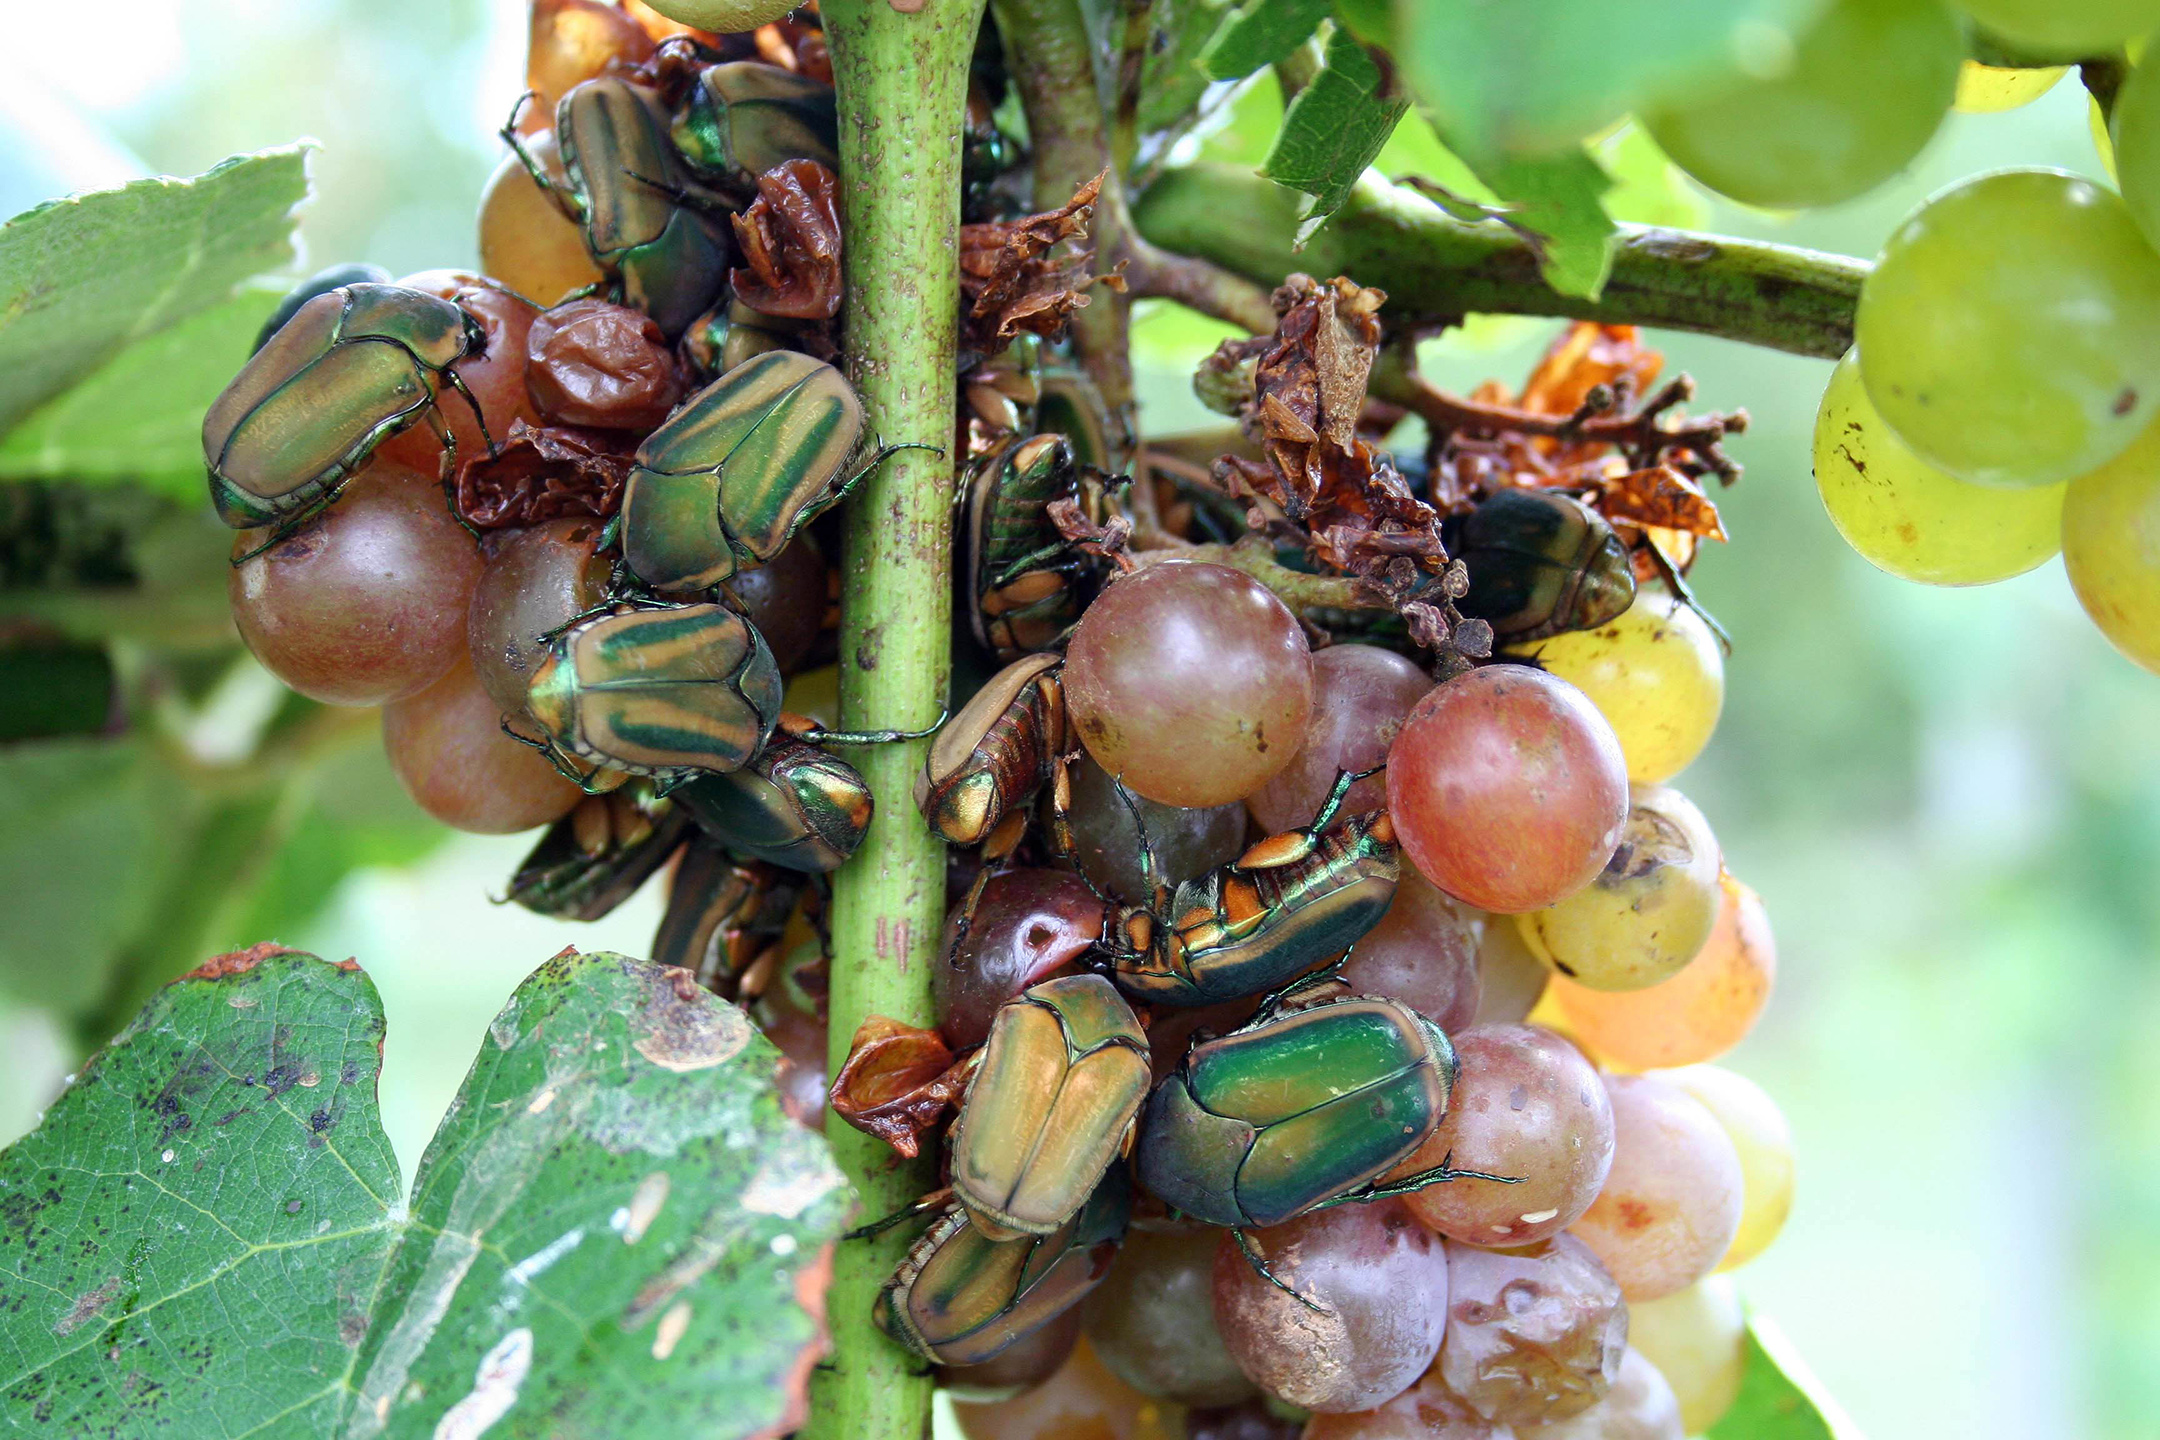 Green June beetle adults feeding on fruit. 